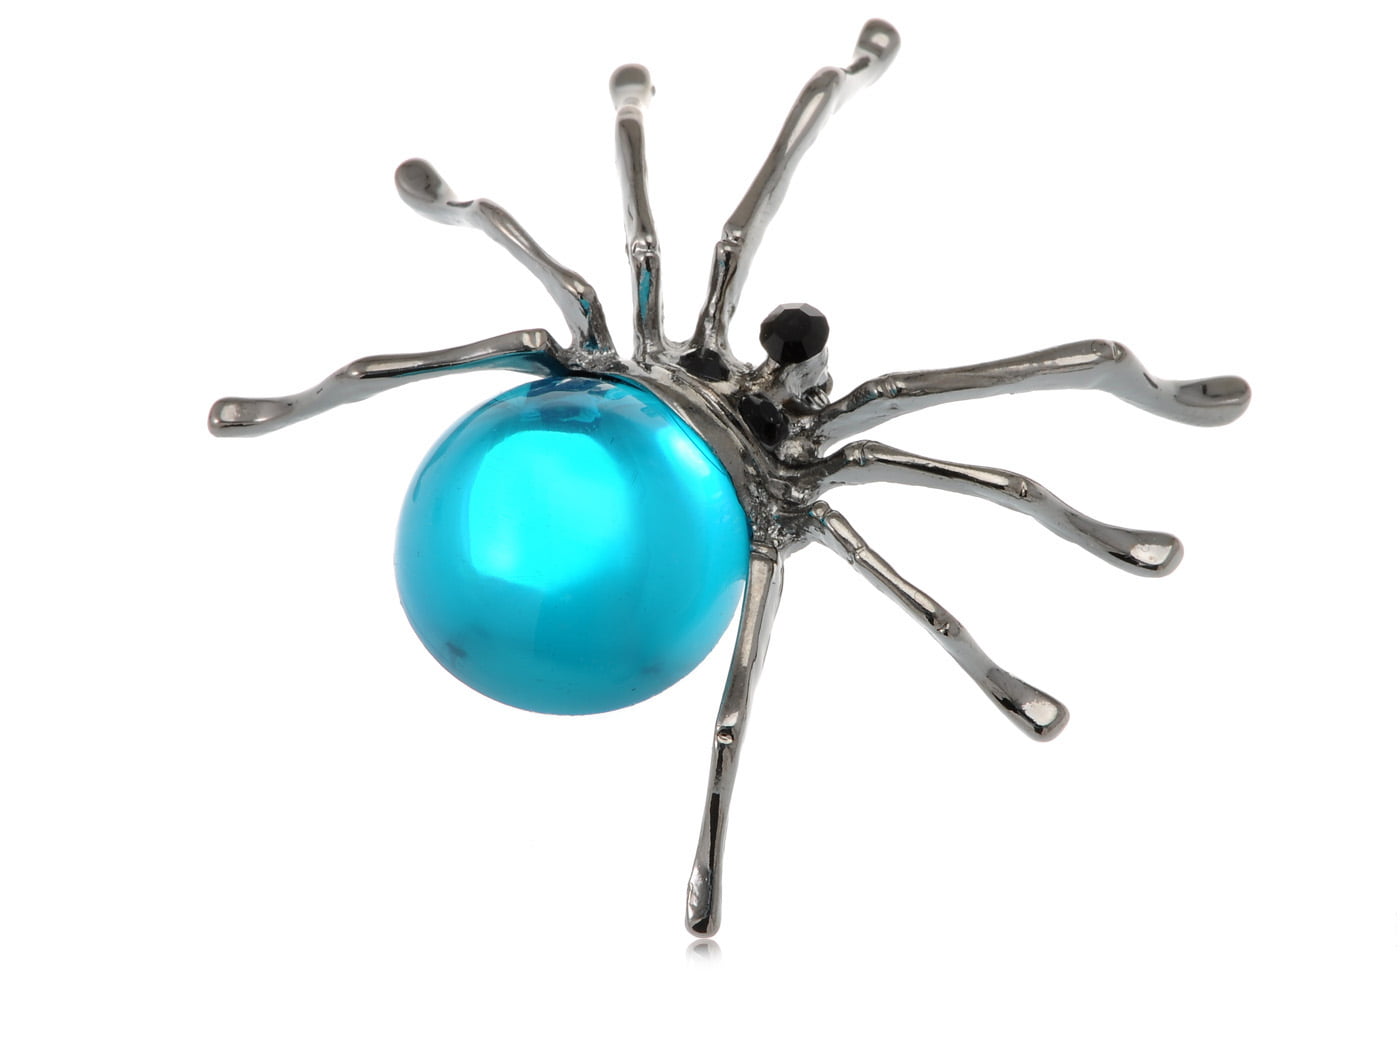 Grey Widow Spider Luxury Rhinestone Diamante Gem Brooch Metal Pin Badge